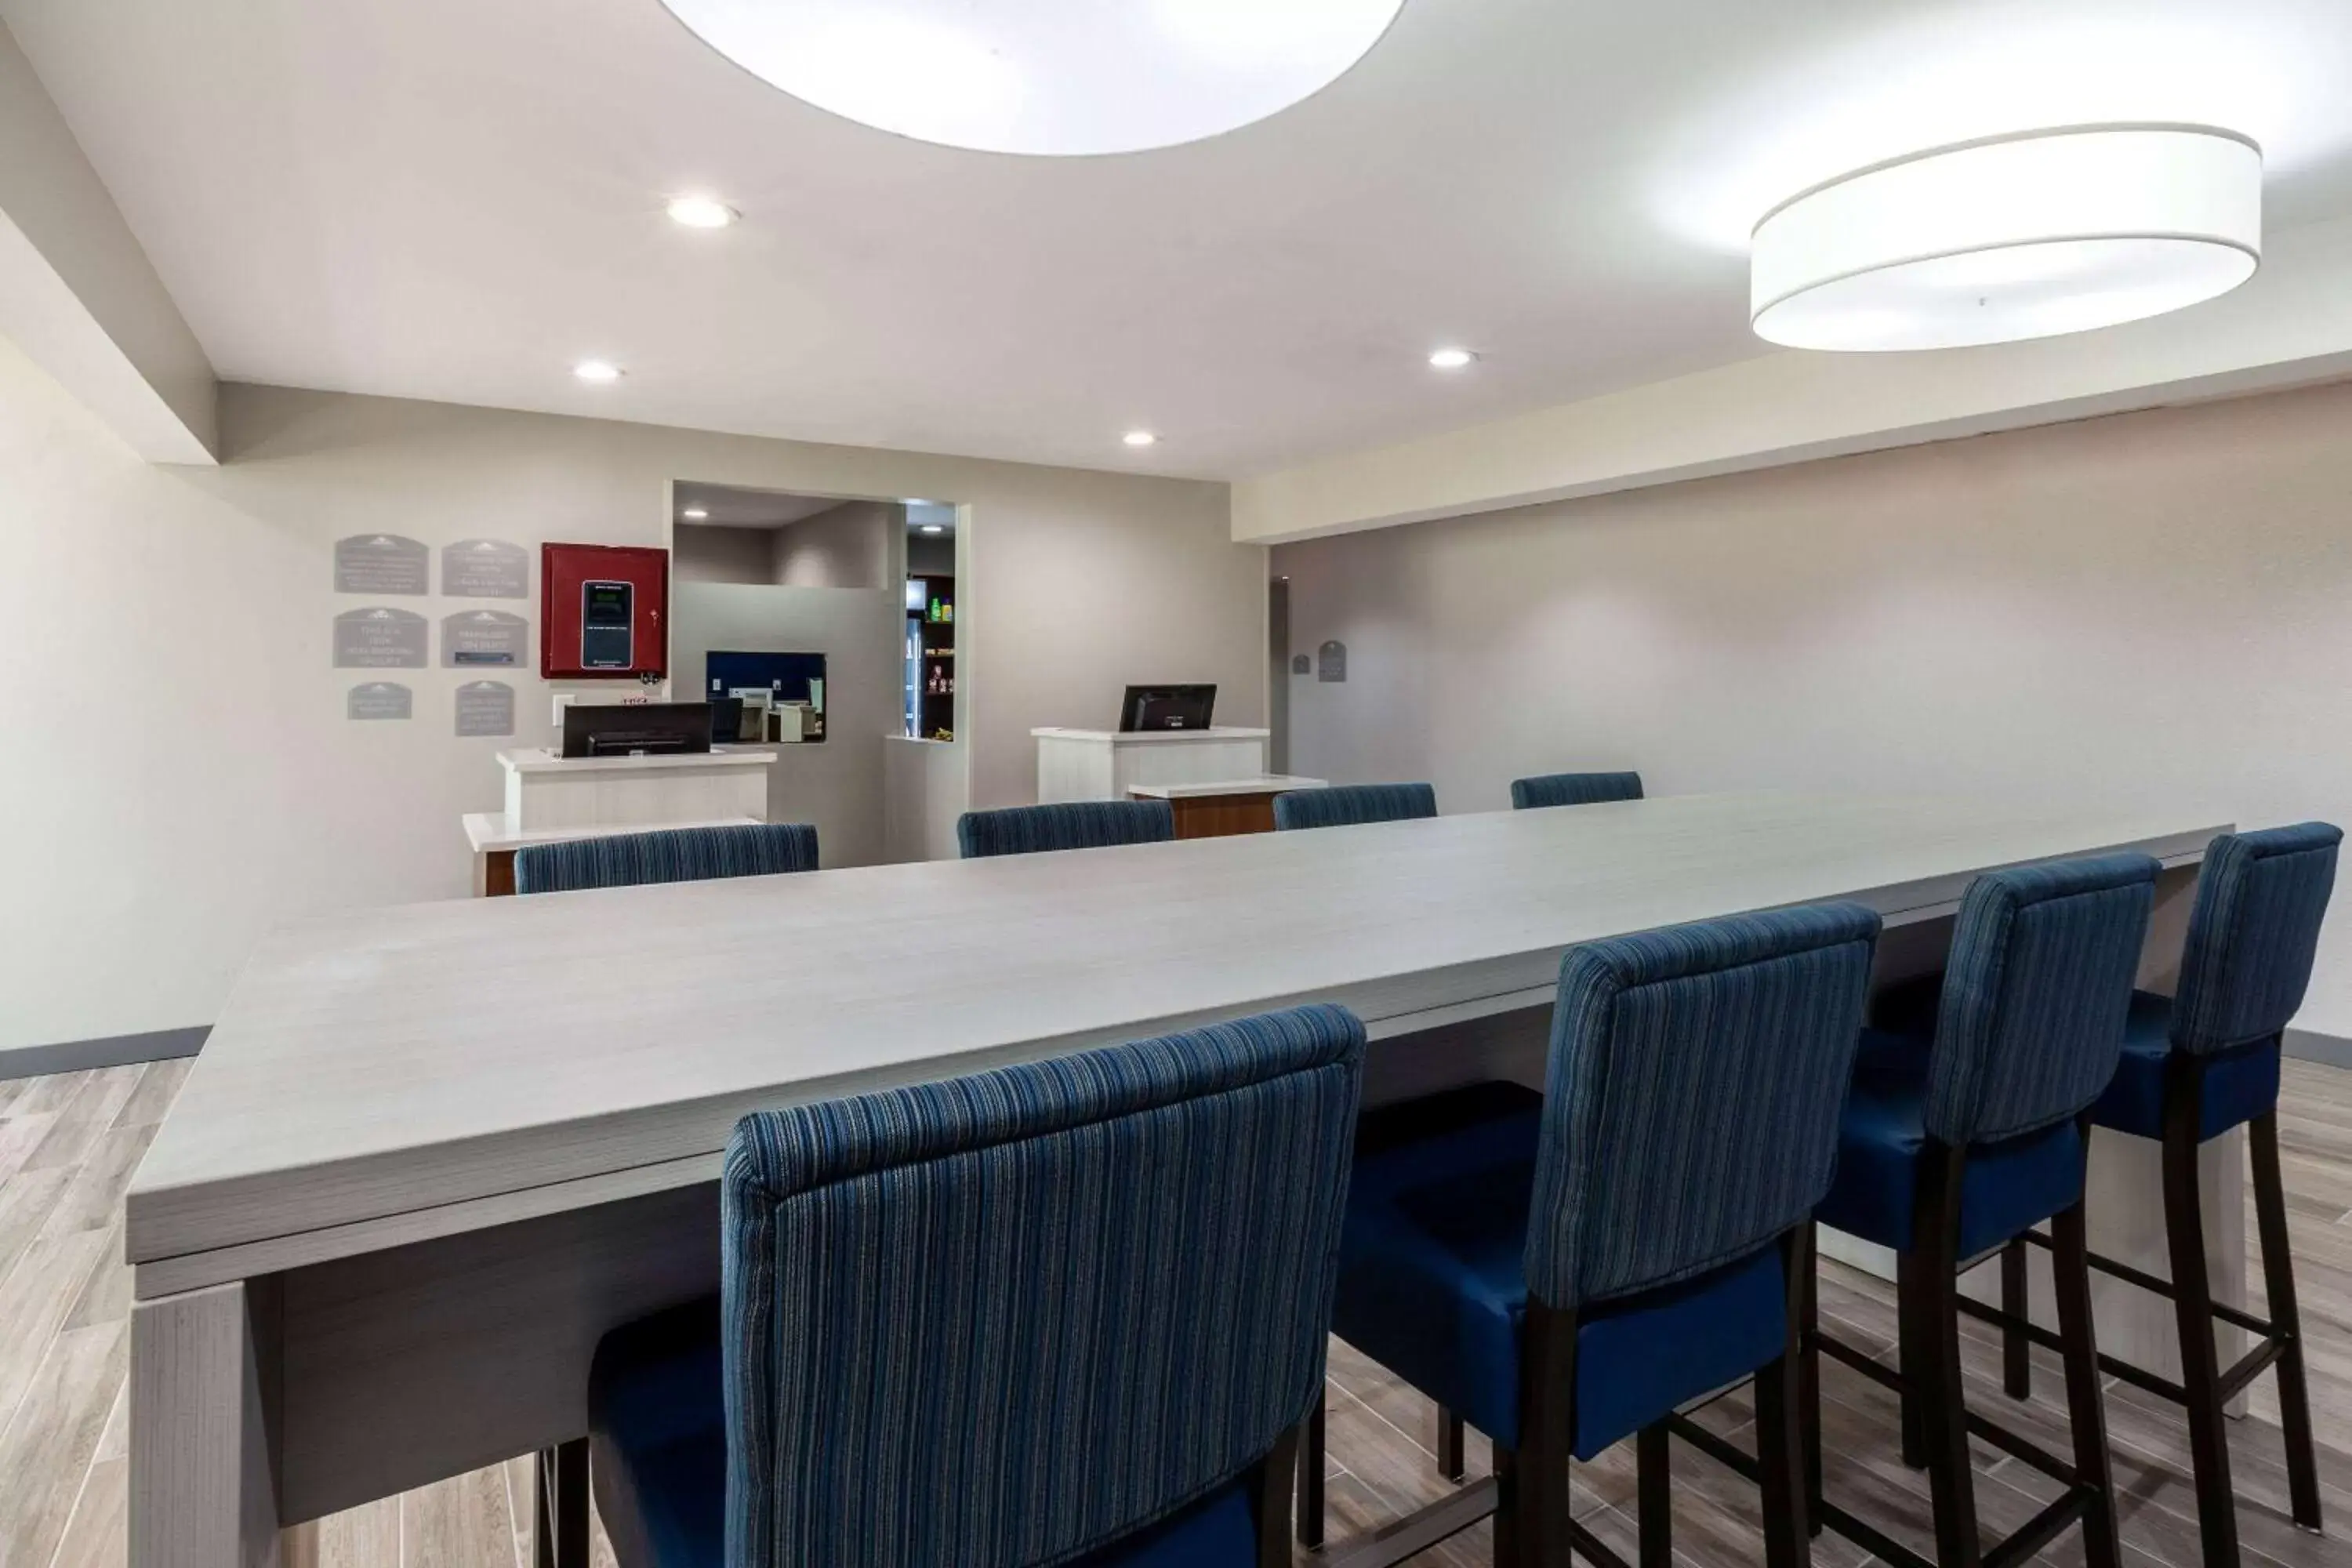 Lobby or reception in Microtel Inn & Suites by Wyndham Sunbury - Columbus North